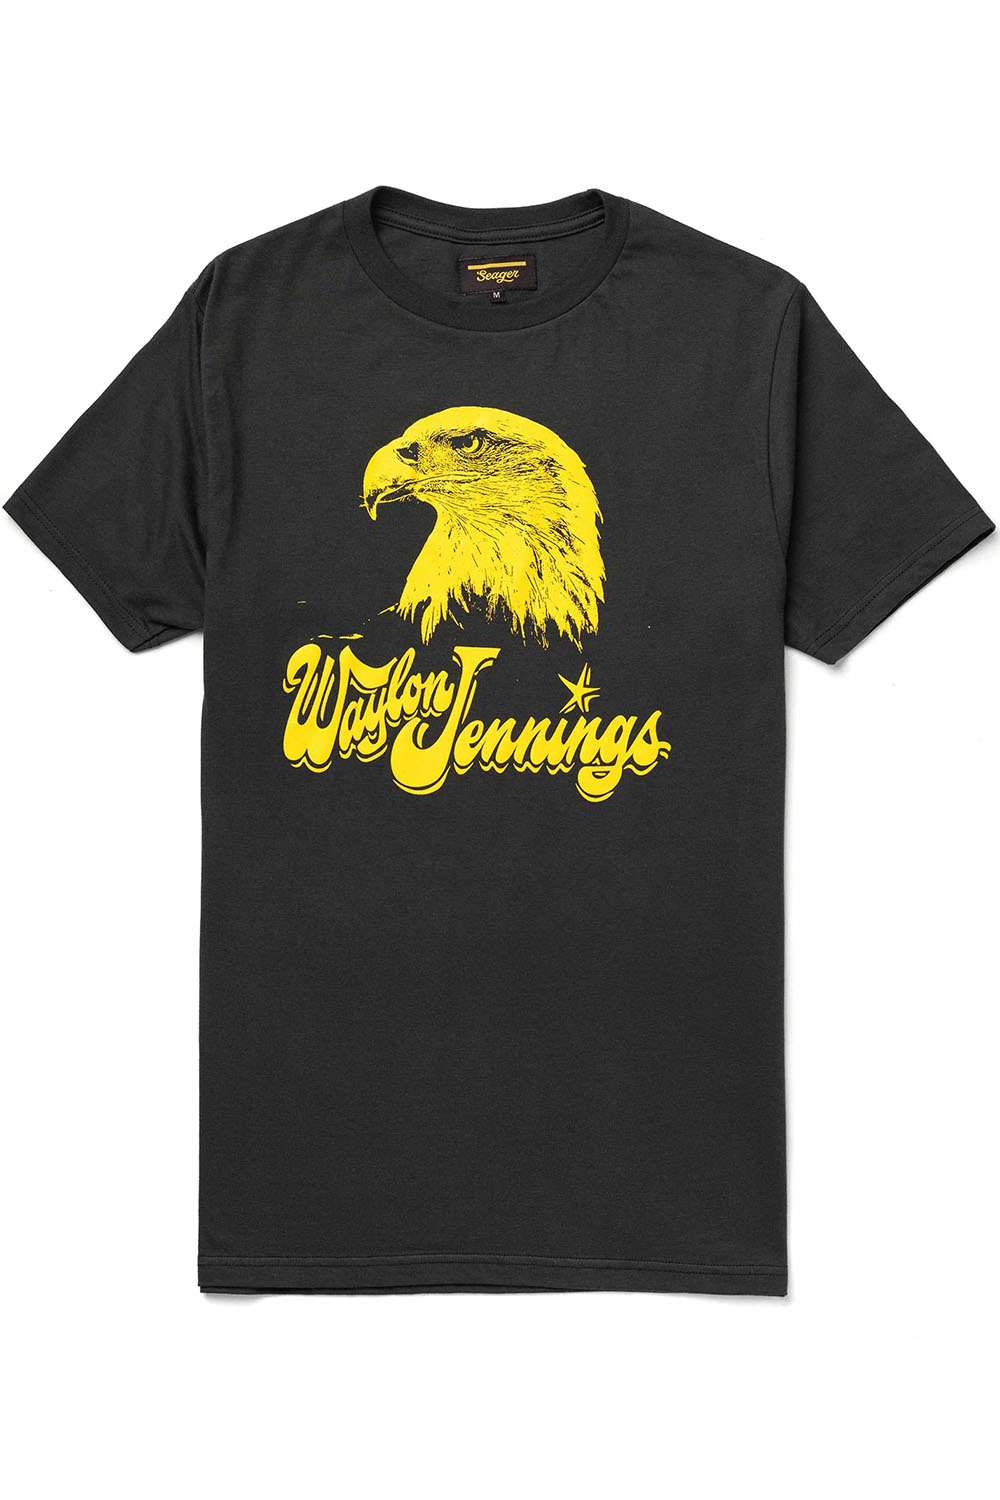 Seager - Waylon Jennings Eagle Tee - Vintage Black - Front